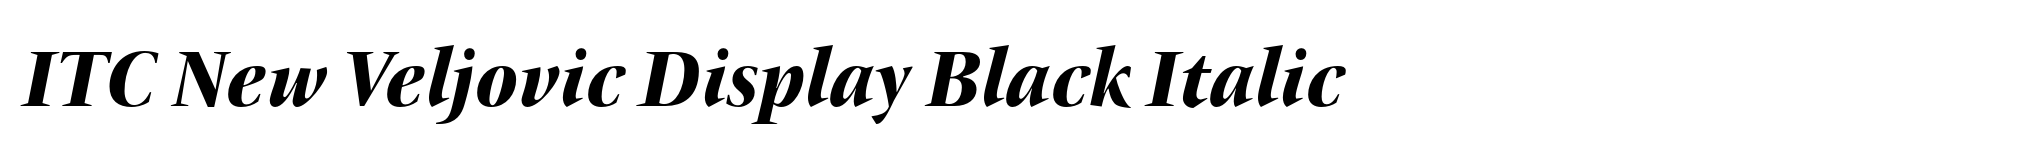 ITC New Veljovic Display Black Italic image